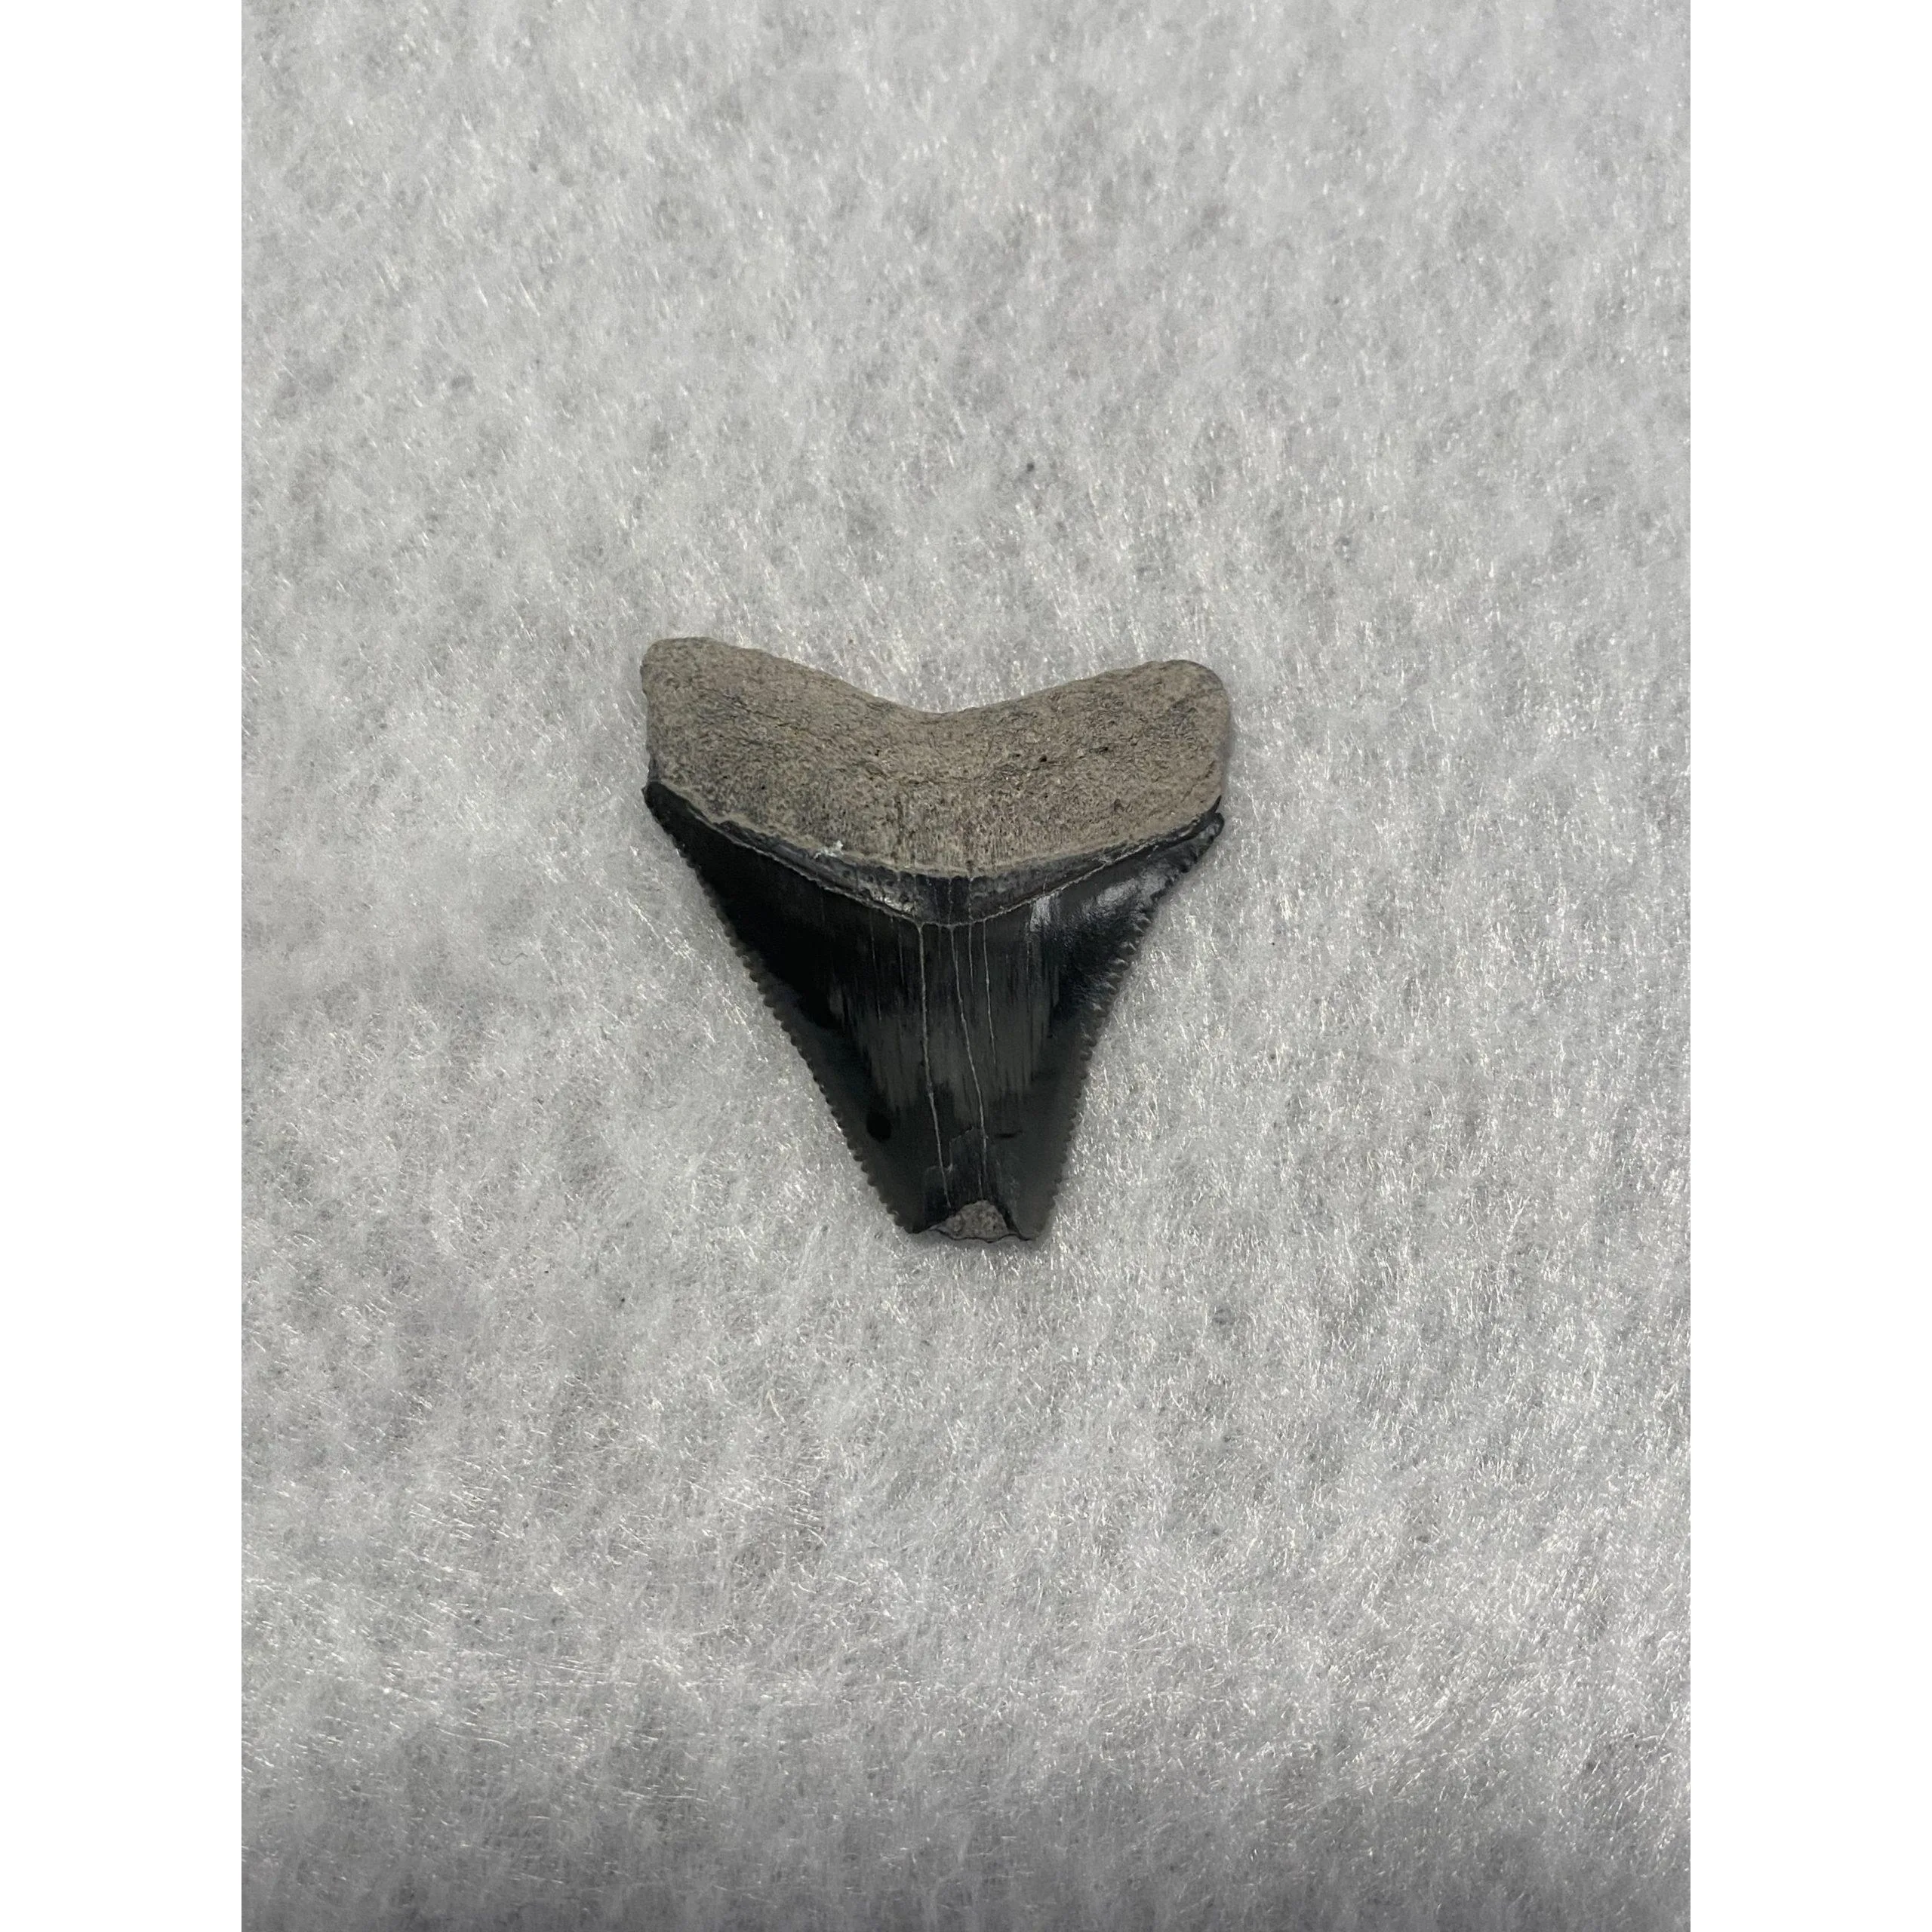 Megalodon Tooth, Bone Valley, Florida,1.56 inch Prehistoric Online